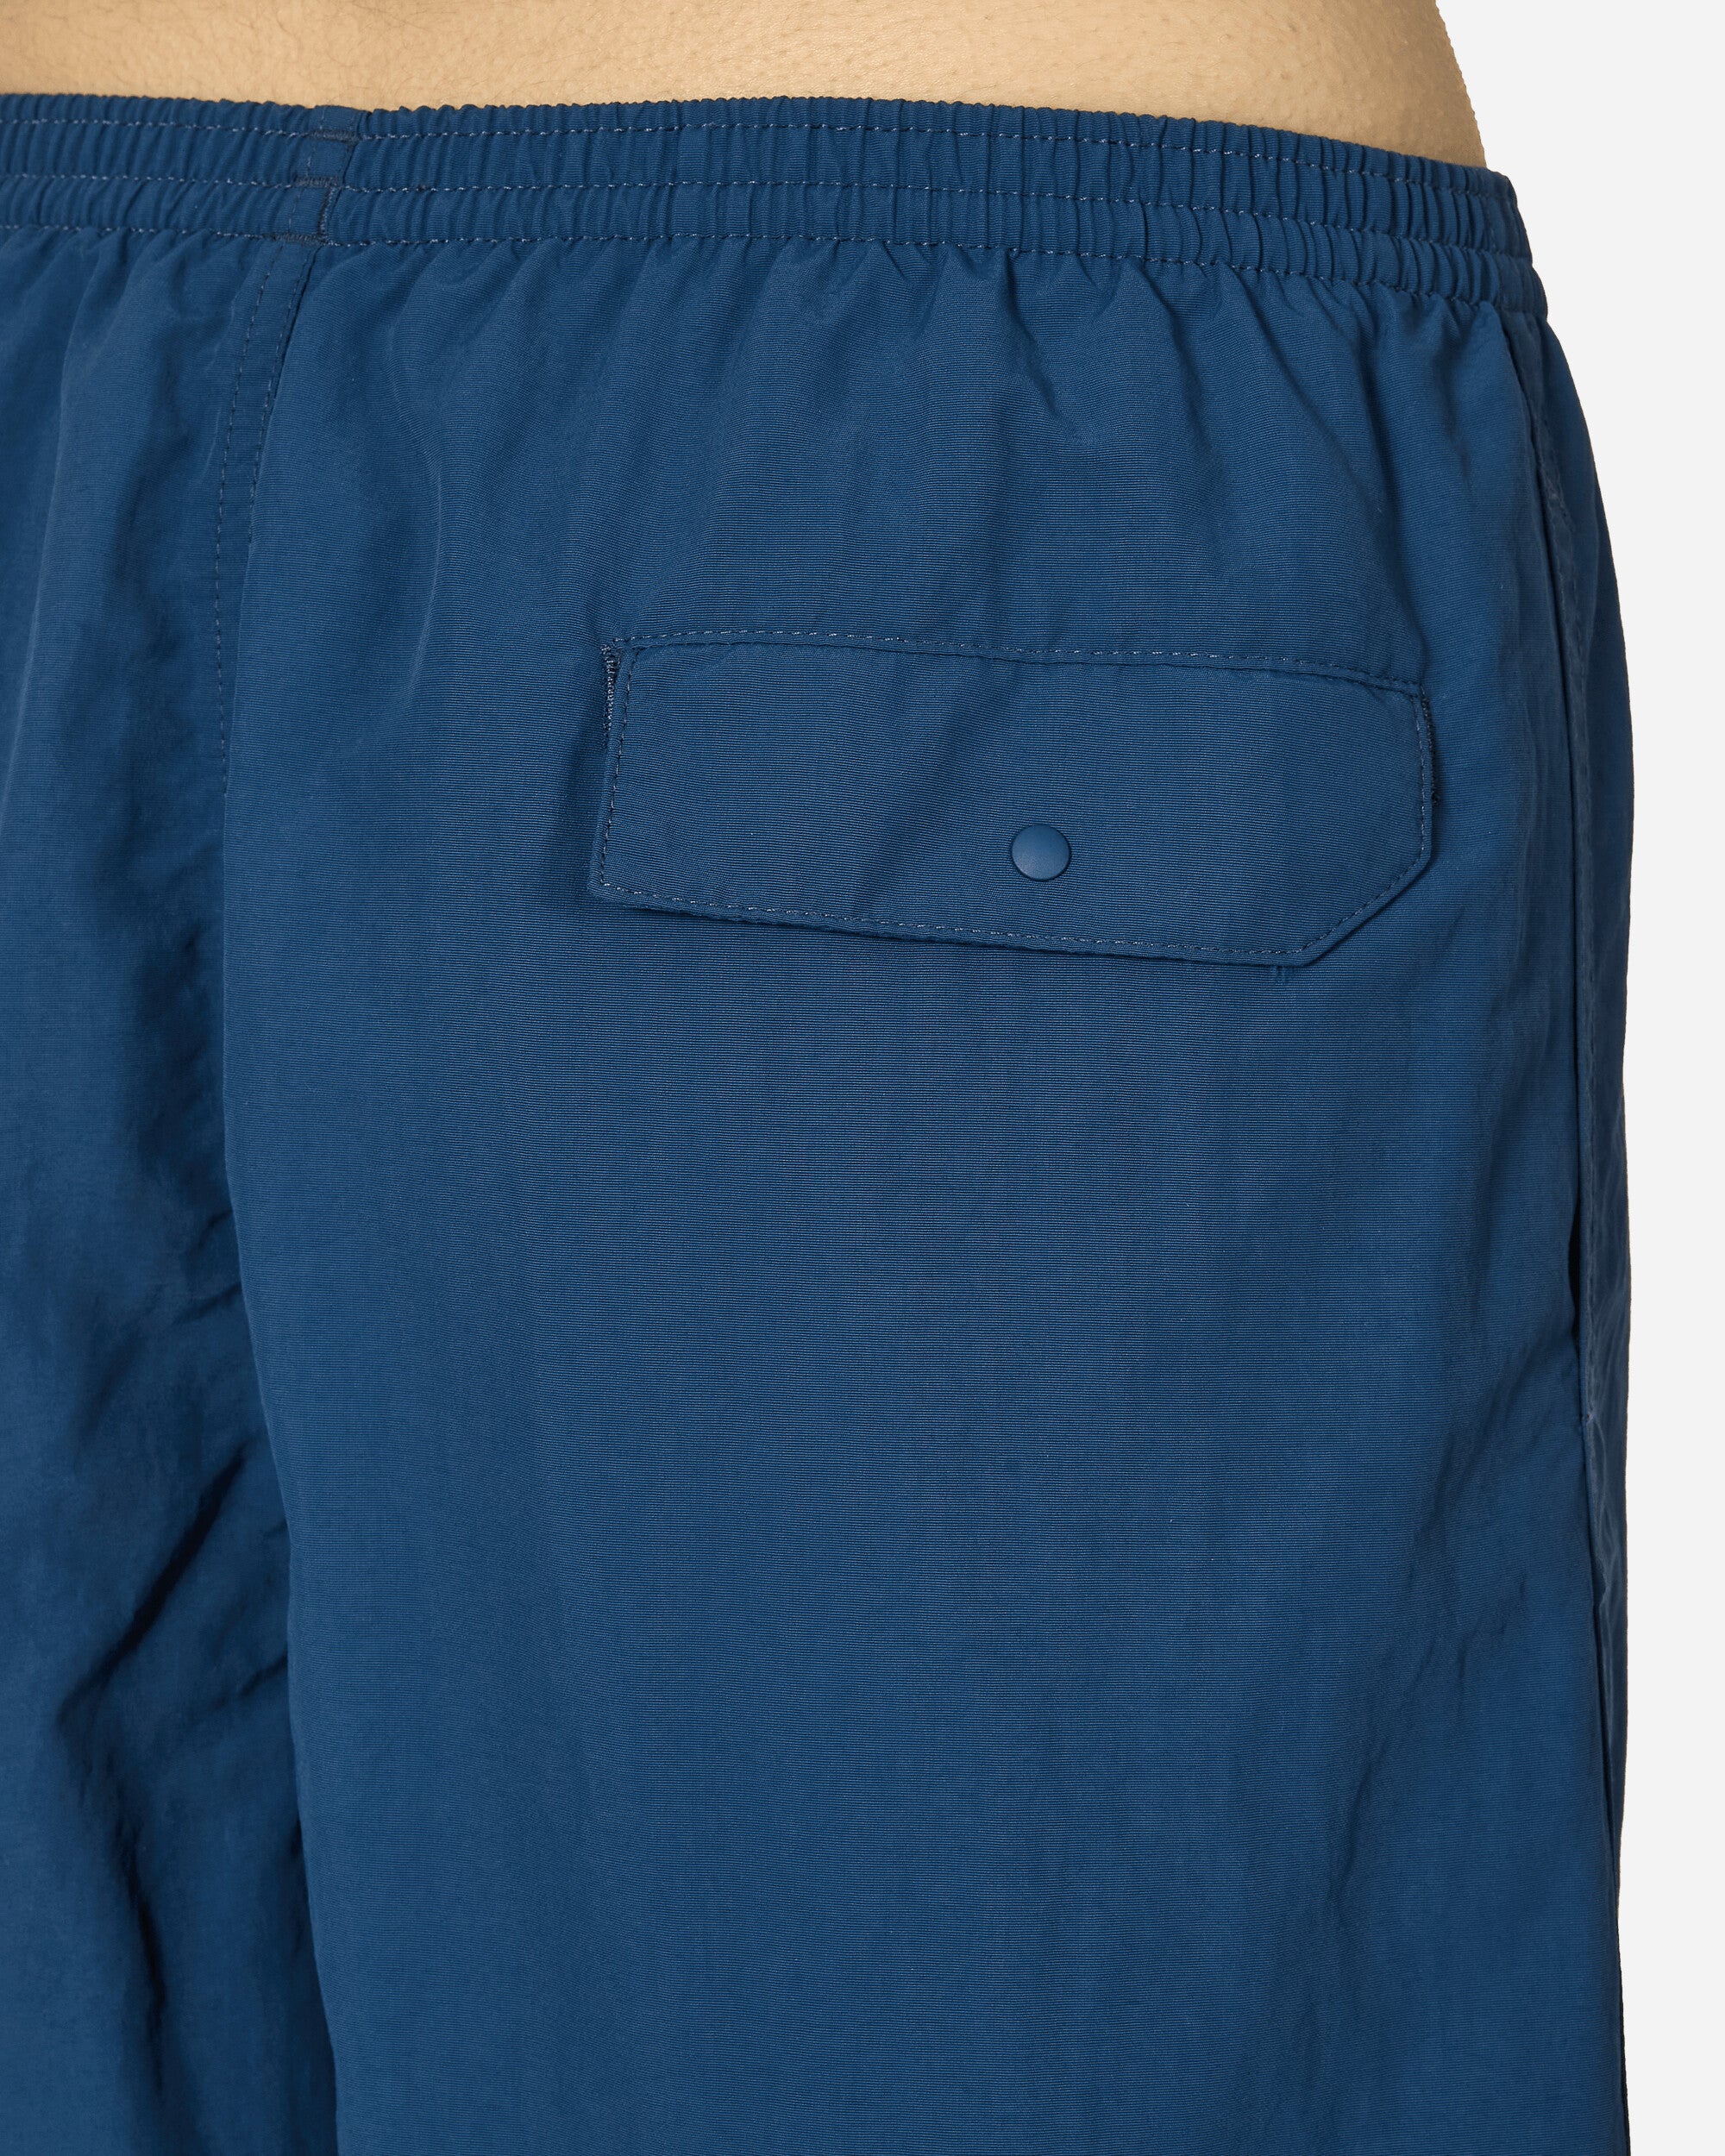 Patagonia M'S Baggies Longs - 7 In. Tidepool Blue Shorts Short 58035 TIDB